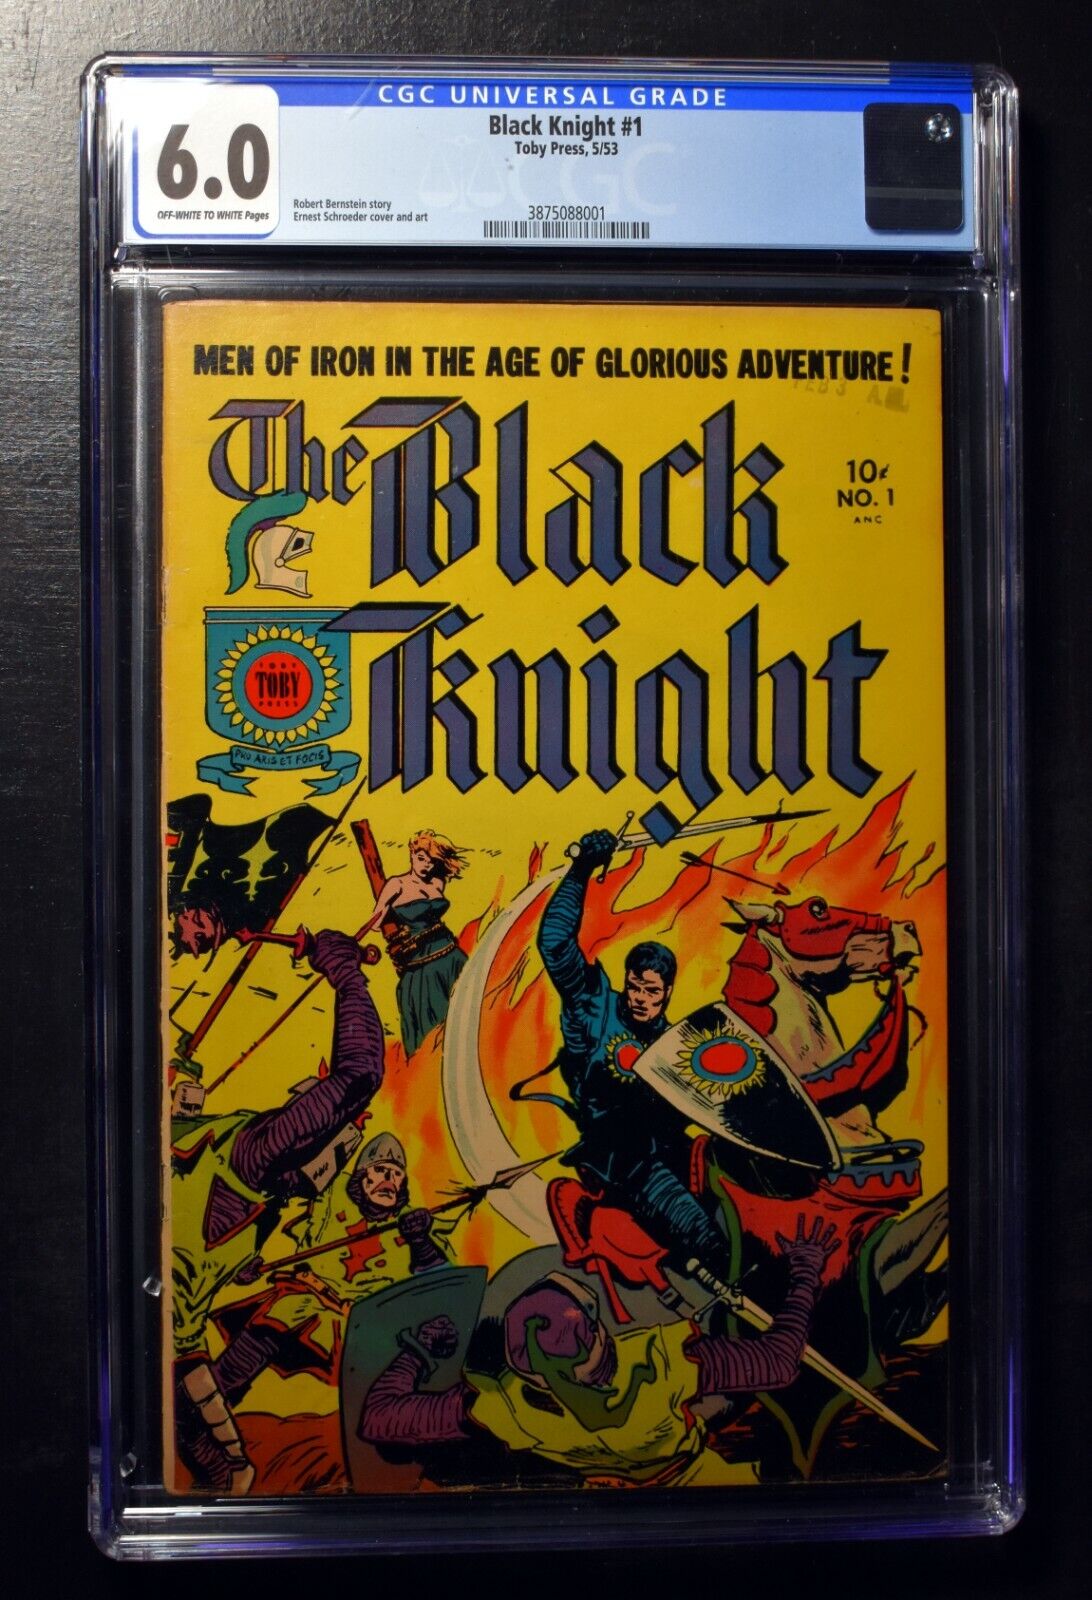 Black Knight #1 - 1953 - Toby Press - CGC 6.0